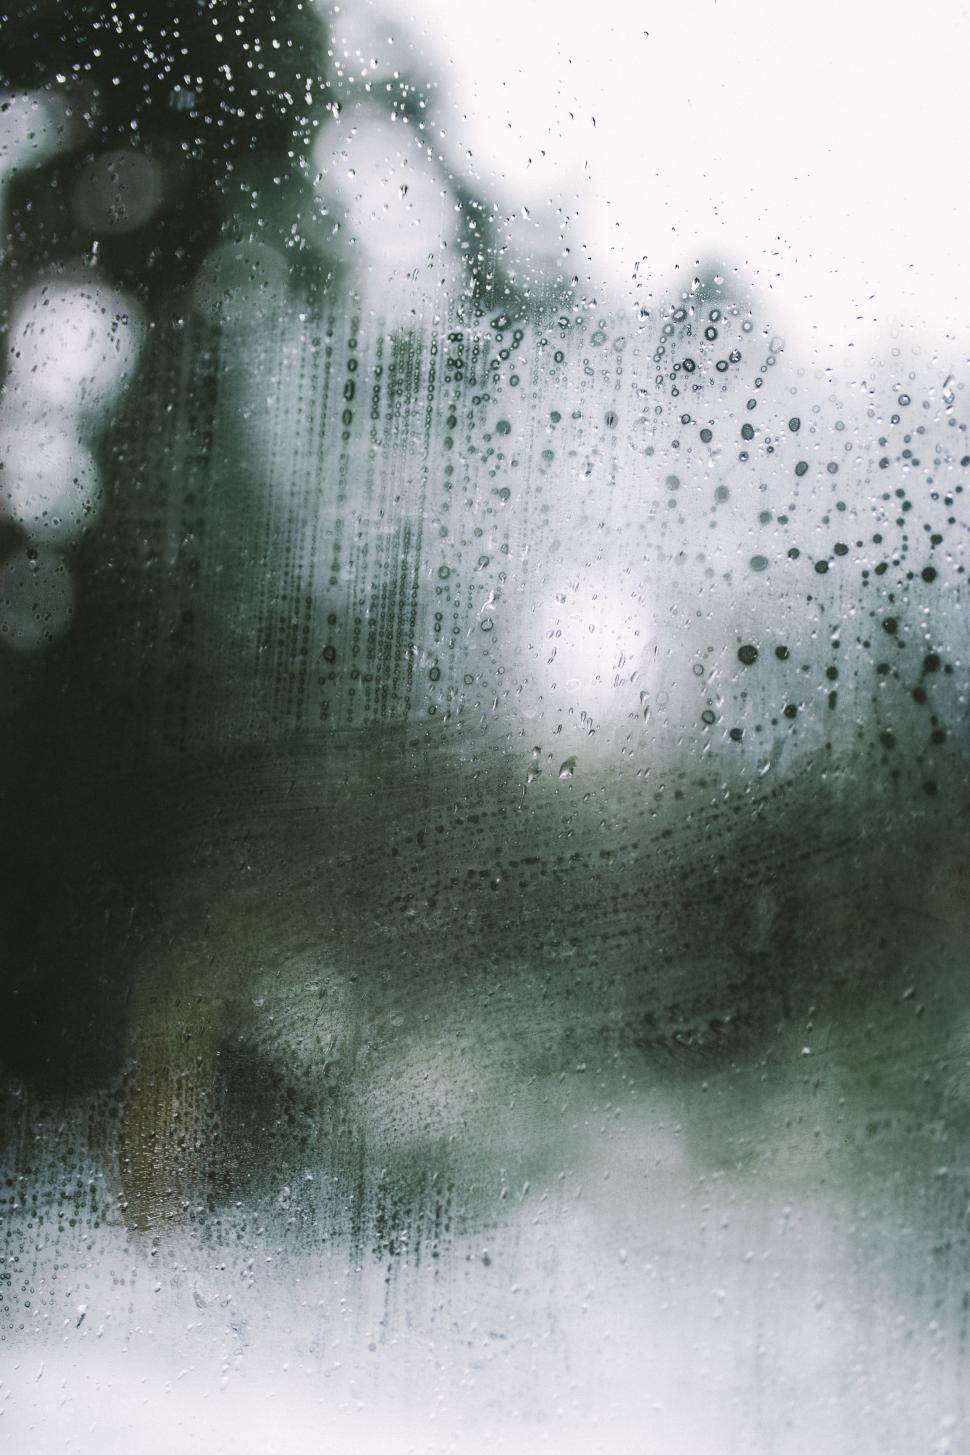 Free Image of Rain Drops on Window 